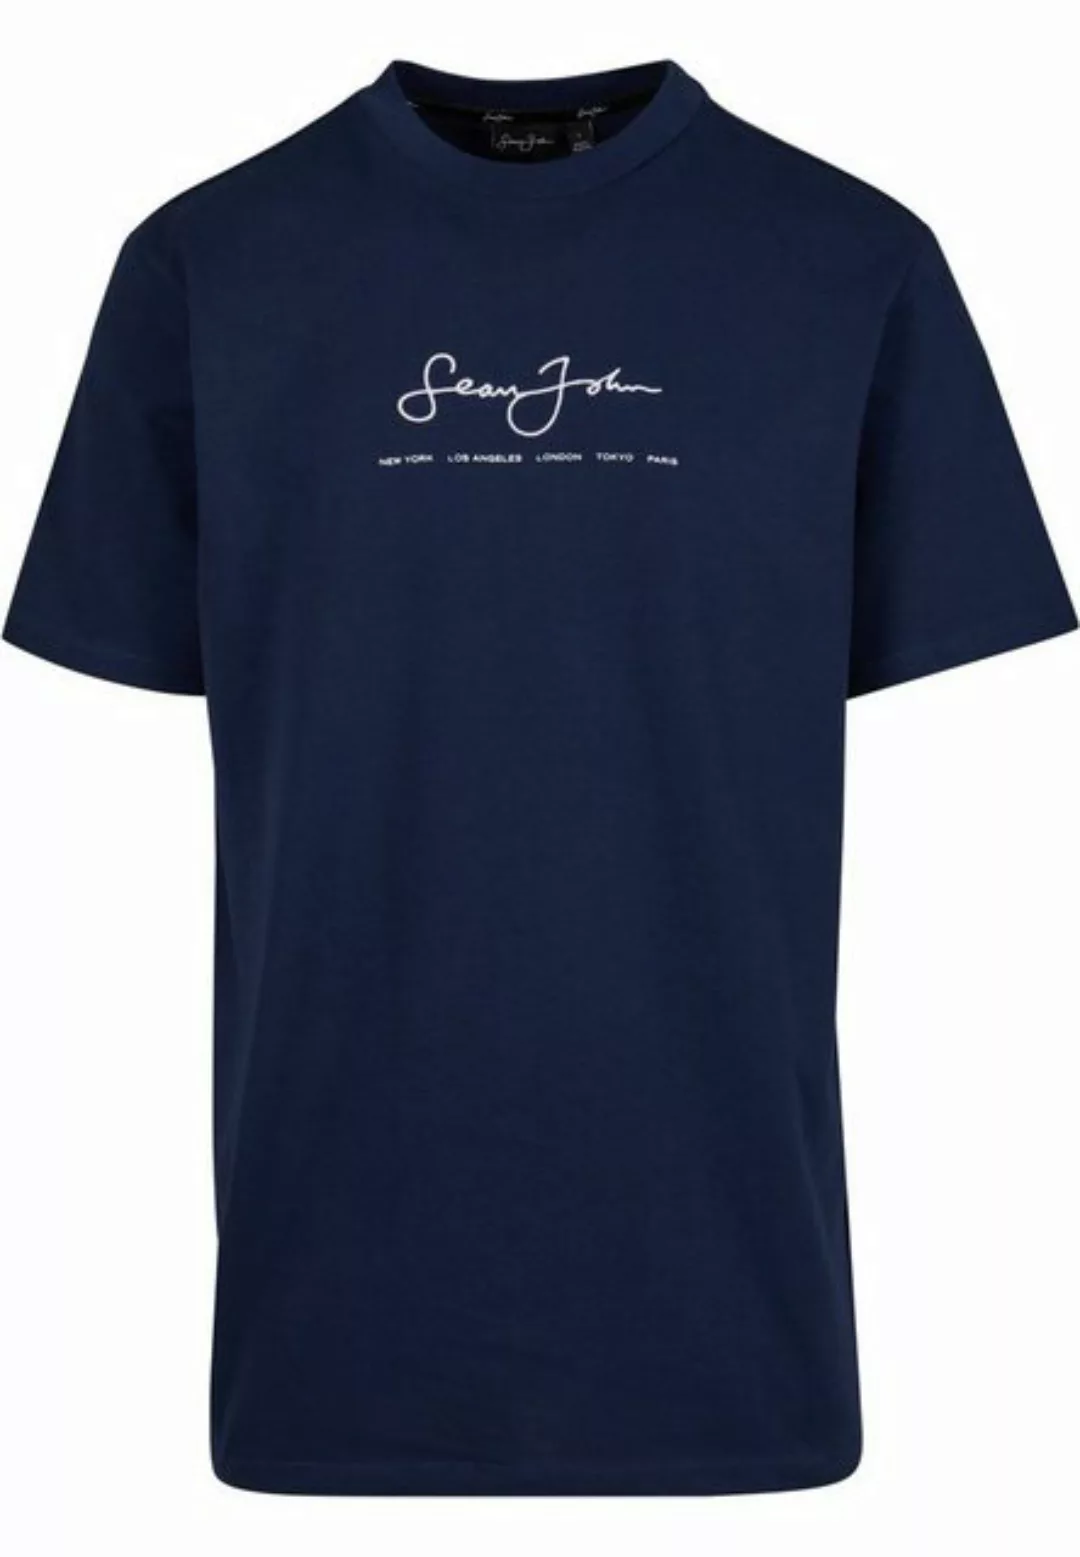 Sean John T-Shirt Herren JM-TE012-092-007 Classic Logo Essential Tee dark b günstig online kaufen